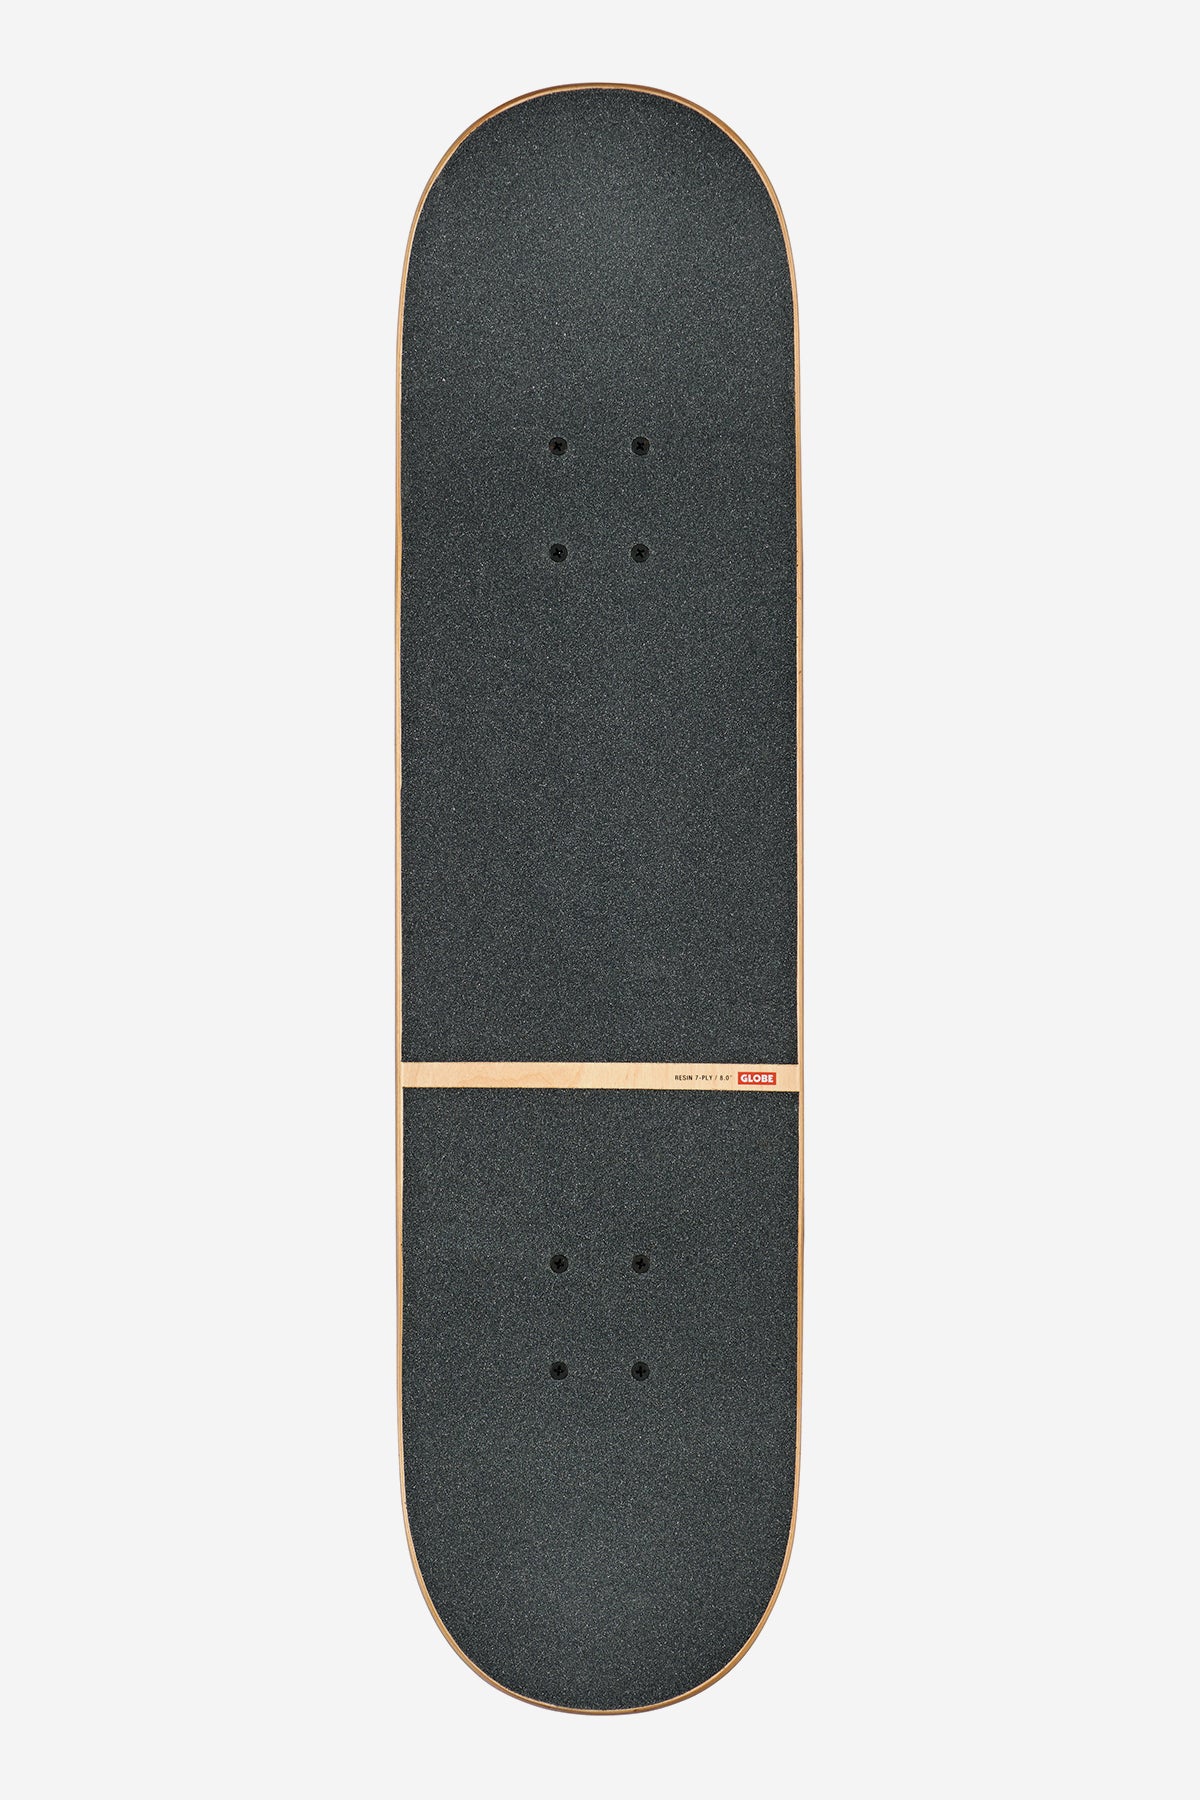 Globe - G1 Stack - Refracted - 8.0" Complete Skateboard